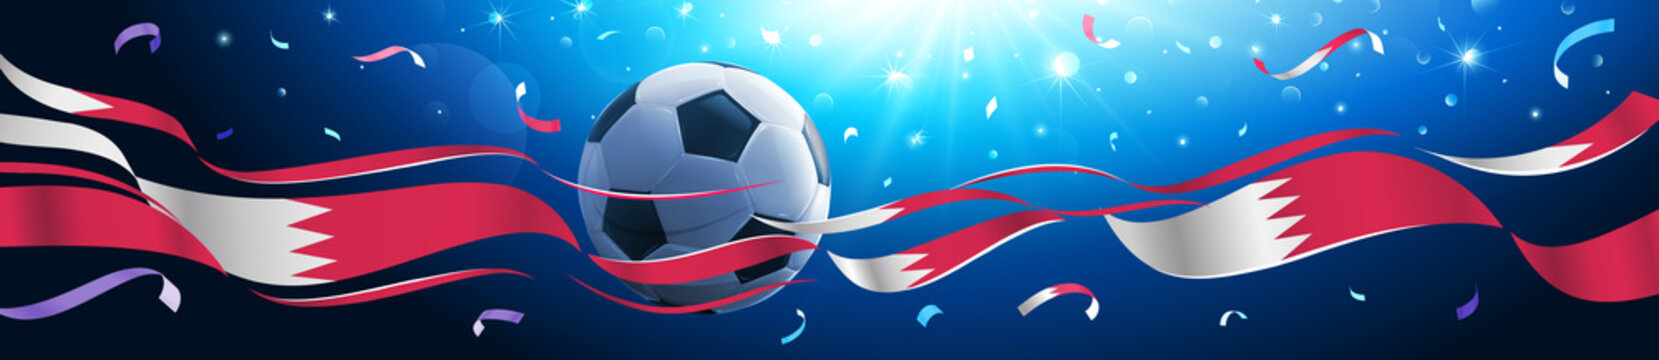 Realistic soccer ball with Qatar flag. Football championship. Vector illustration